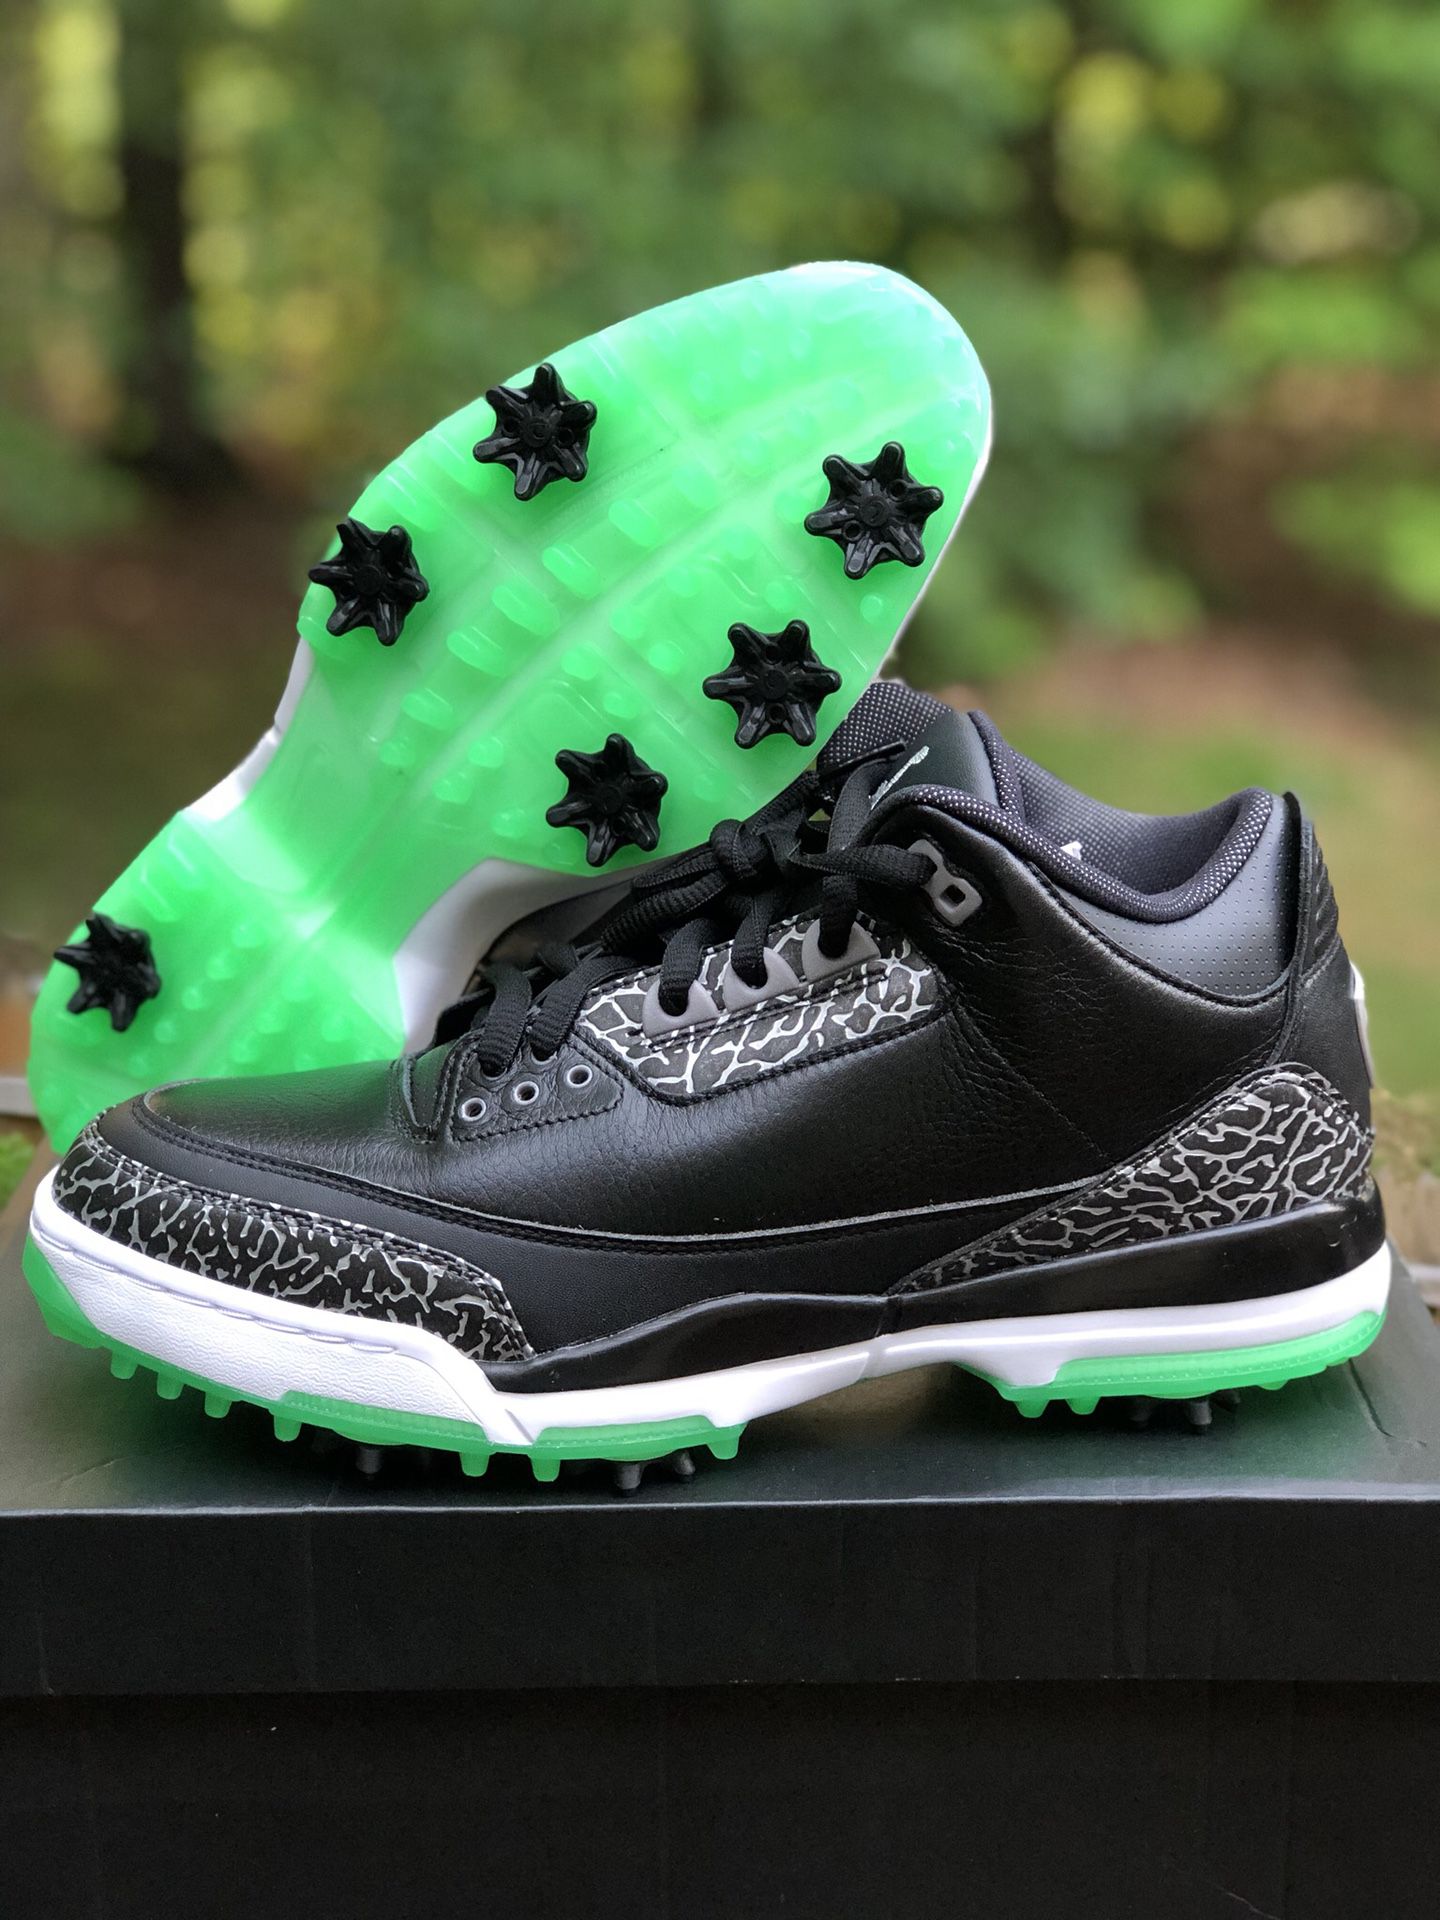 Jordan 3 Retro Golf Black Green Glow size 9.5